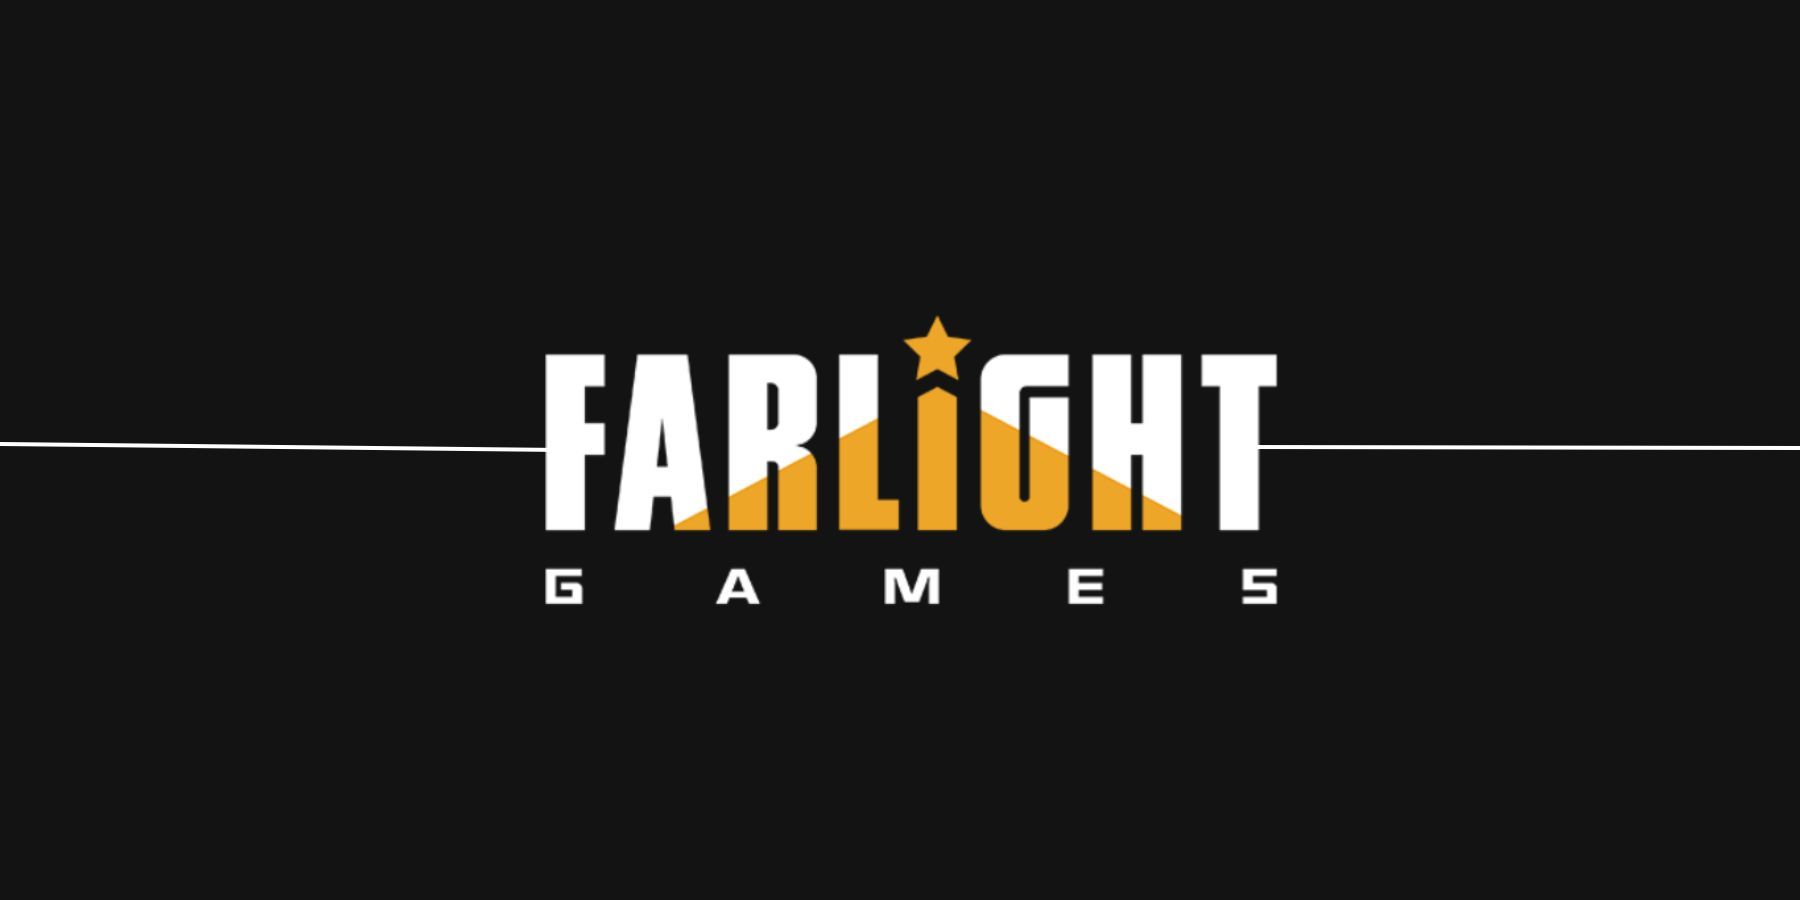 Códigos do Farlight 84 para junho de 2023: como resgatar e encontrar mais -  Farlight 84